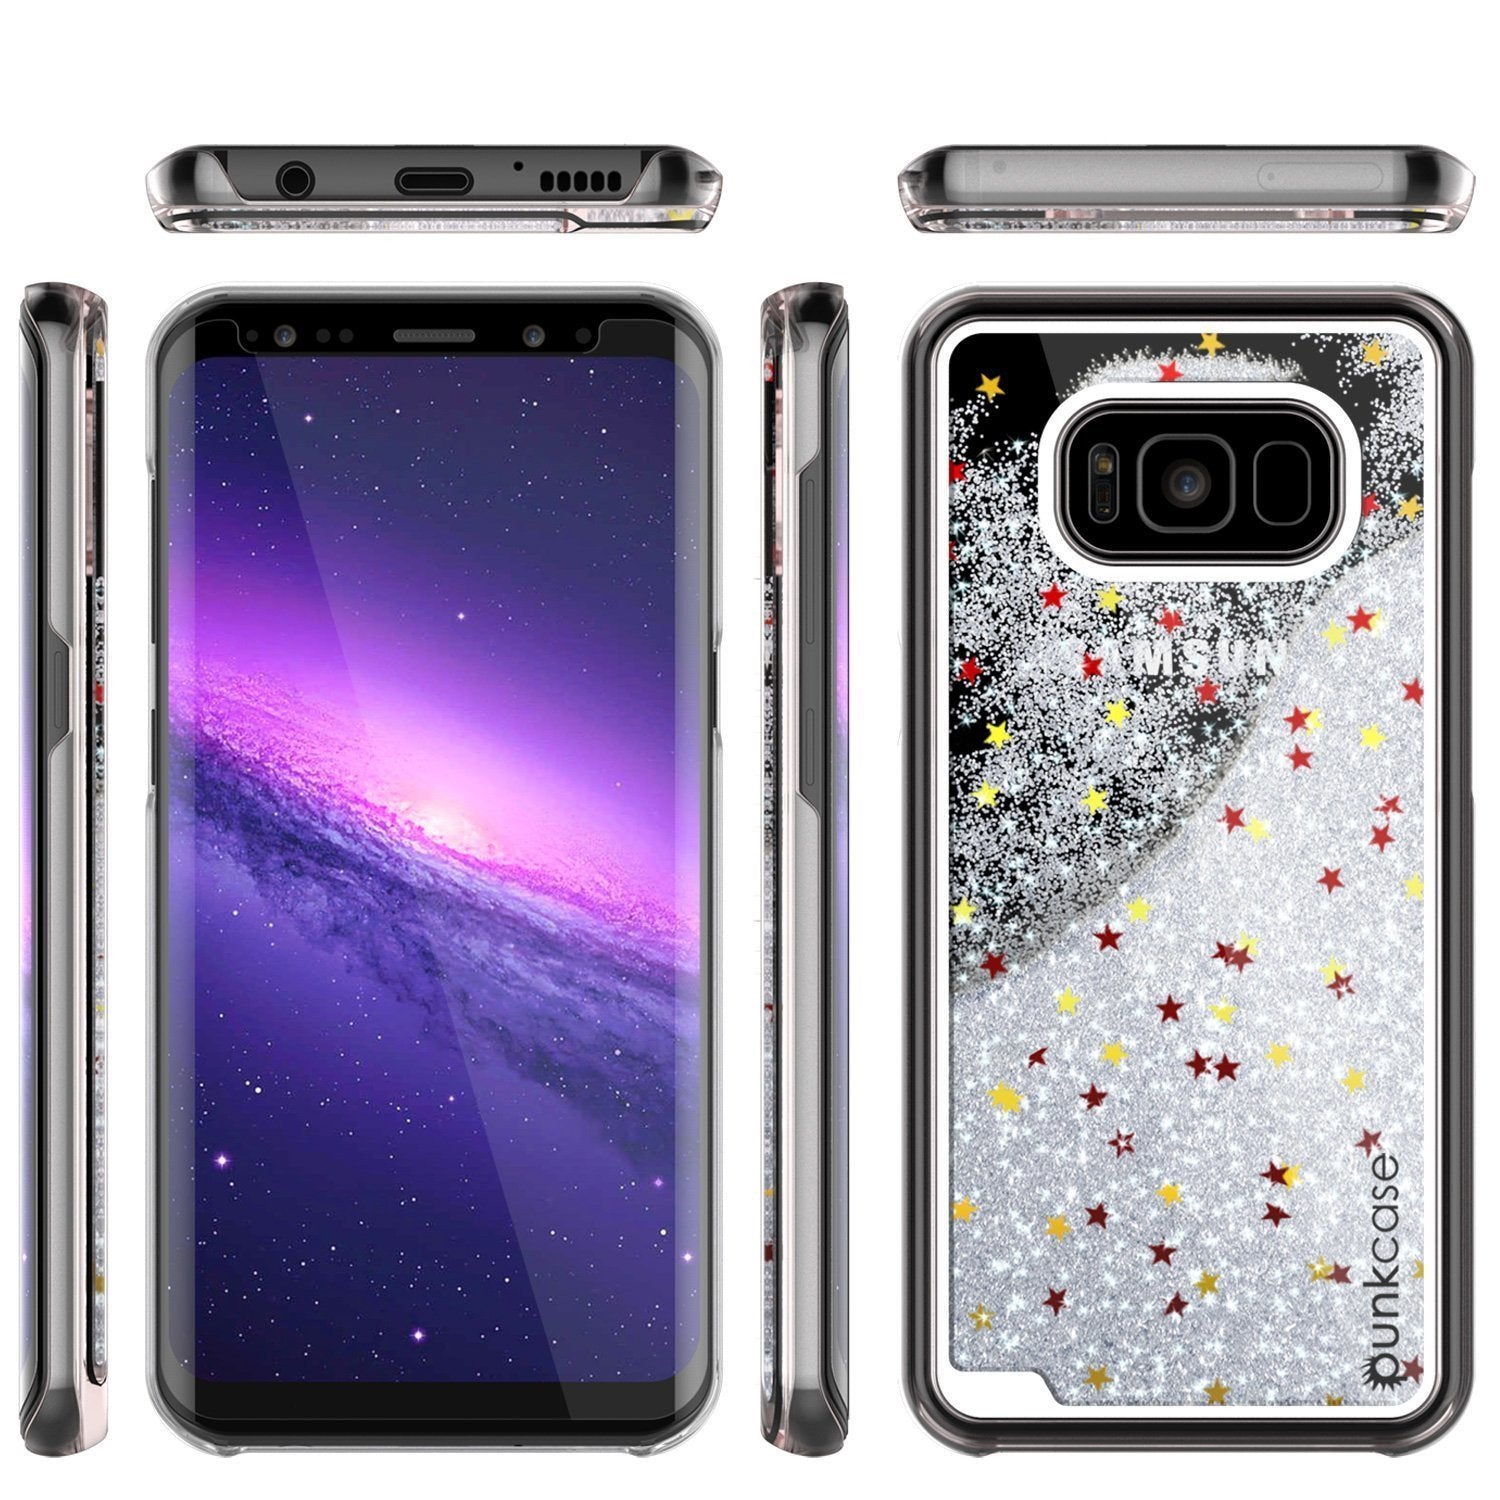 Galaxy S8 Case, Punkcase Liquid Silver Series Protective Glitter Cover